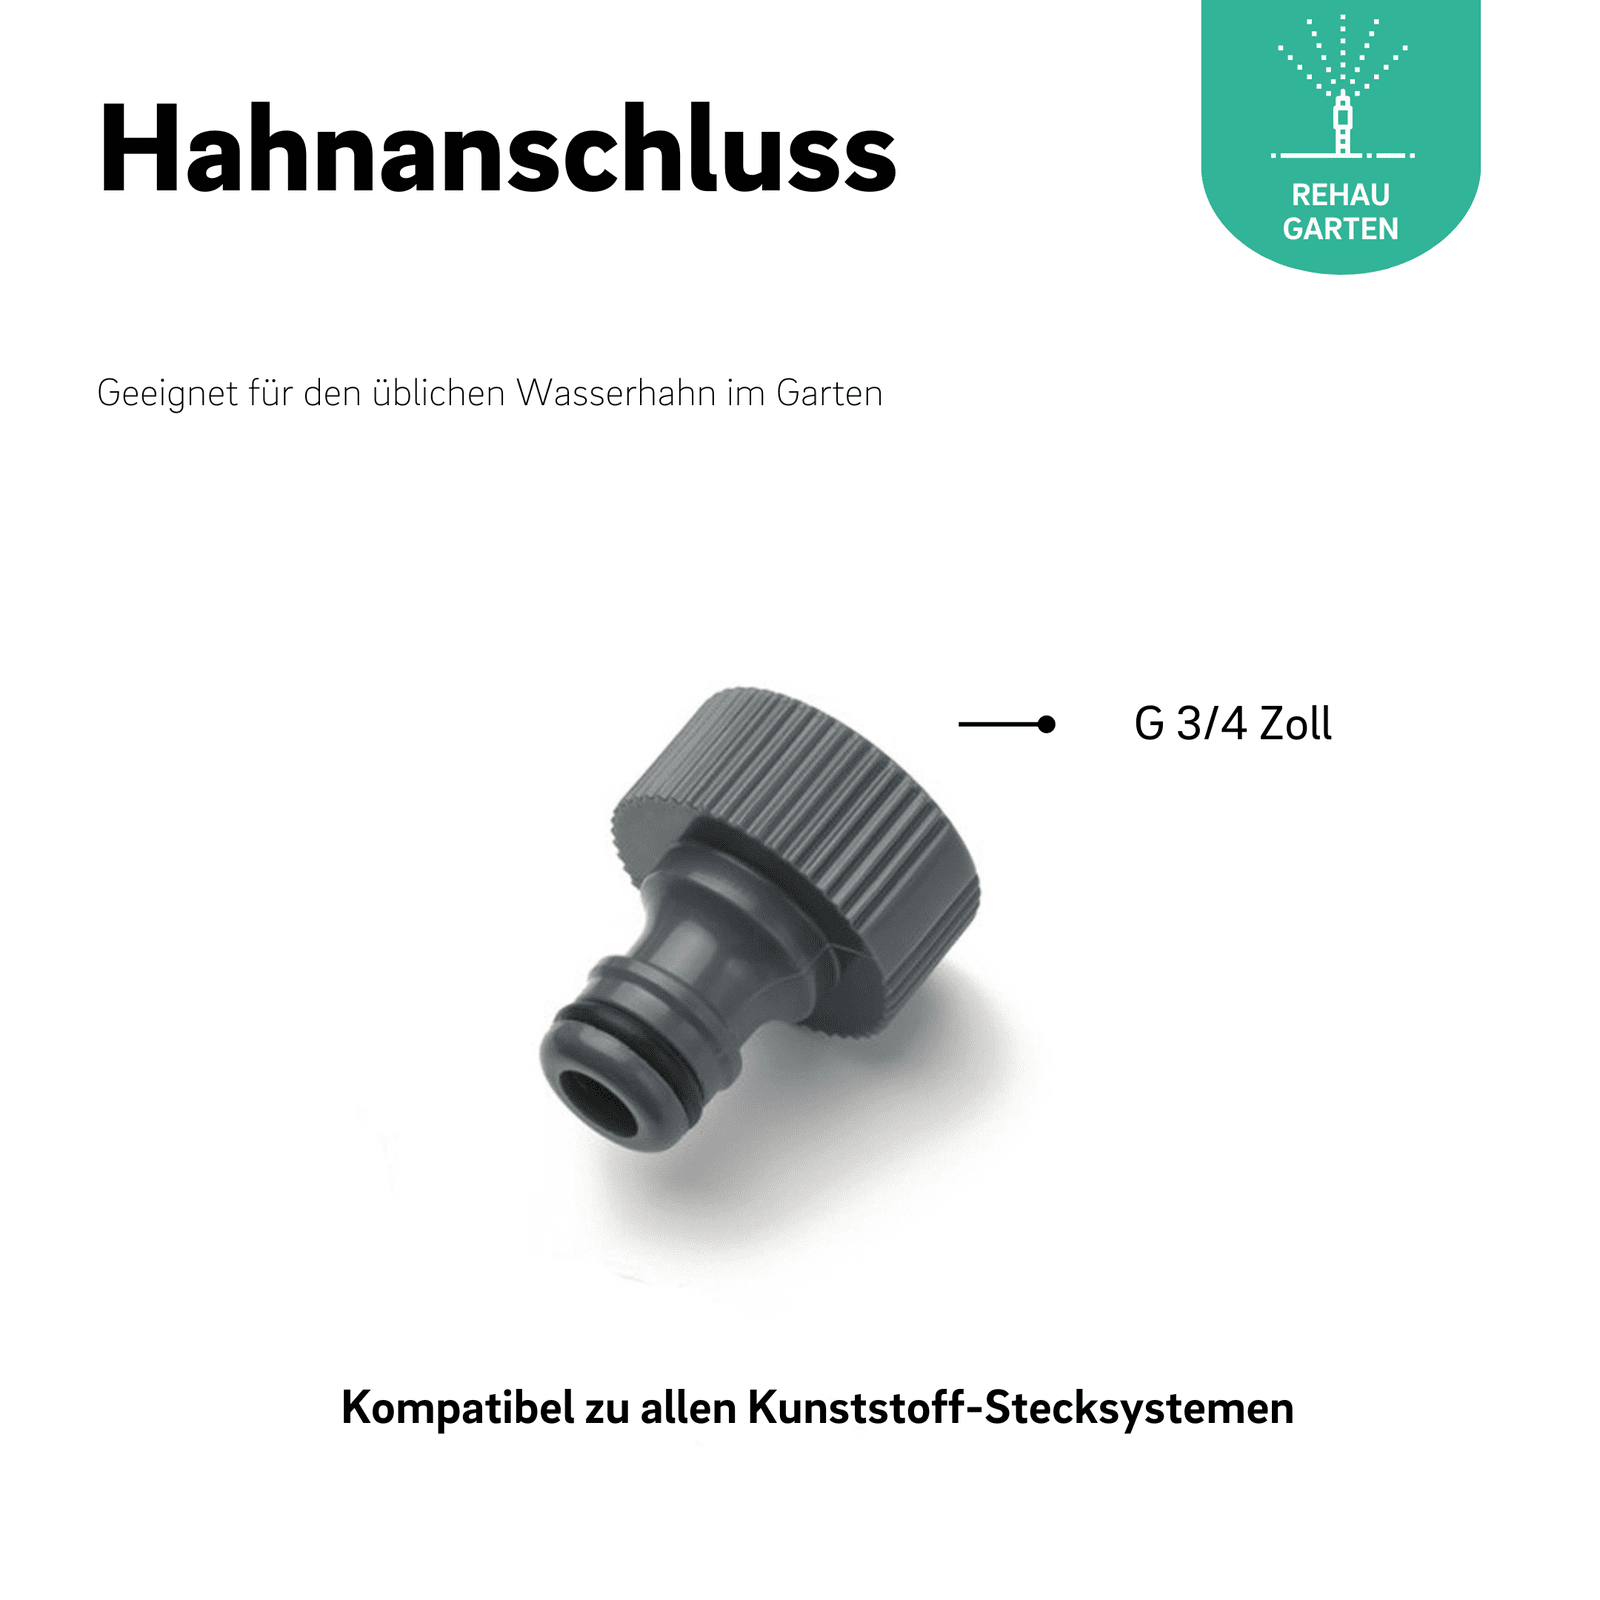 Hahnanschluss G 3/4 Zoll Kunststoff anthrazit - REHAU Gartenshop